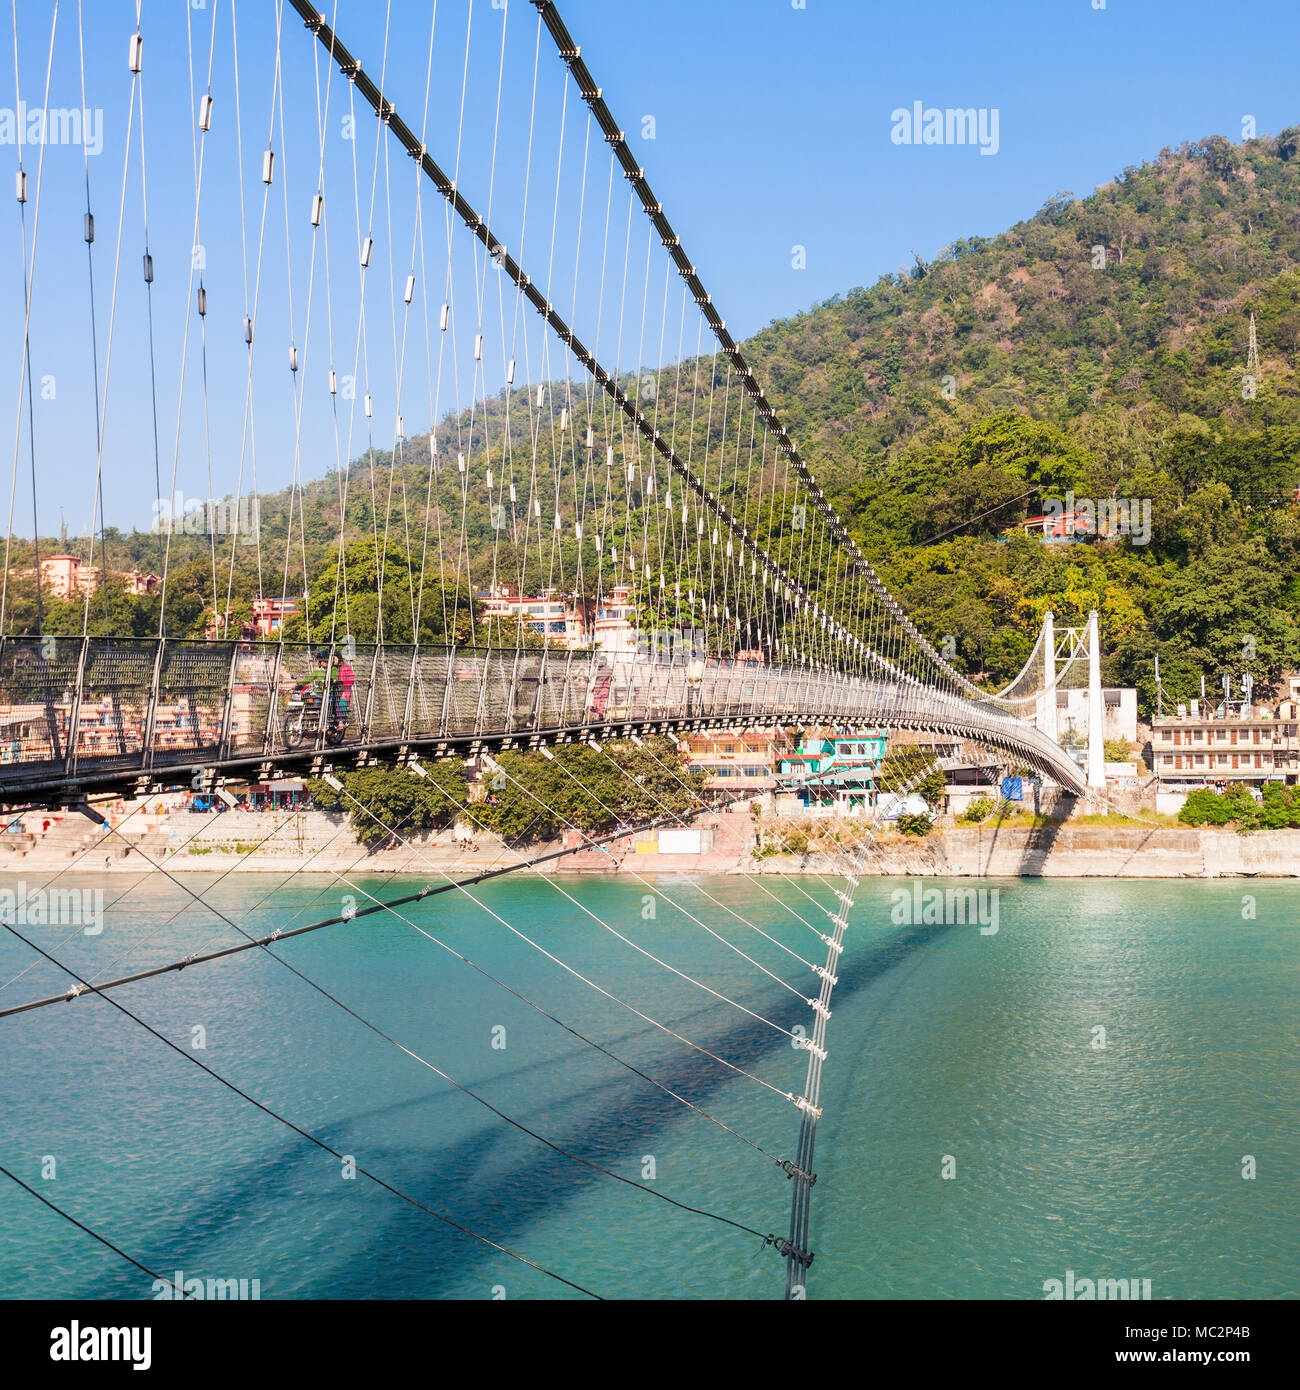 Ram Jhula is an iron suspension bridge situated in Rishikesh, Uttarakhand state of India Stock Photo Alamy